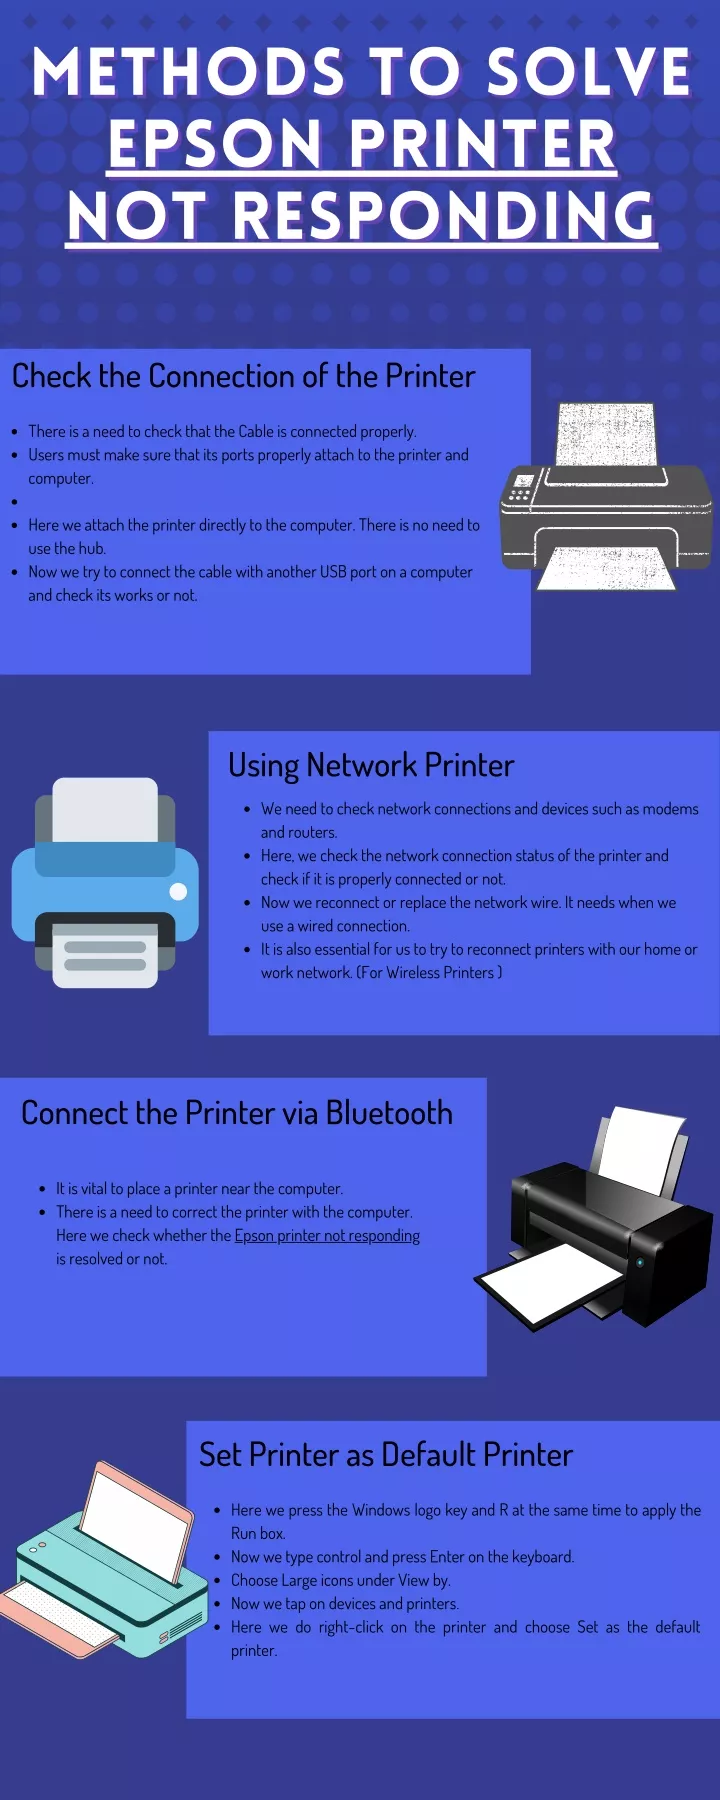 methods to solve methods to solve epson printer